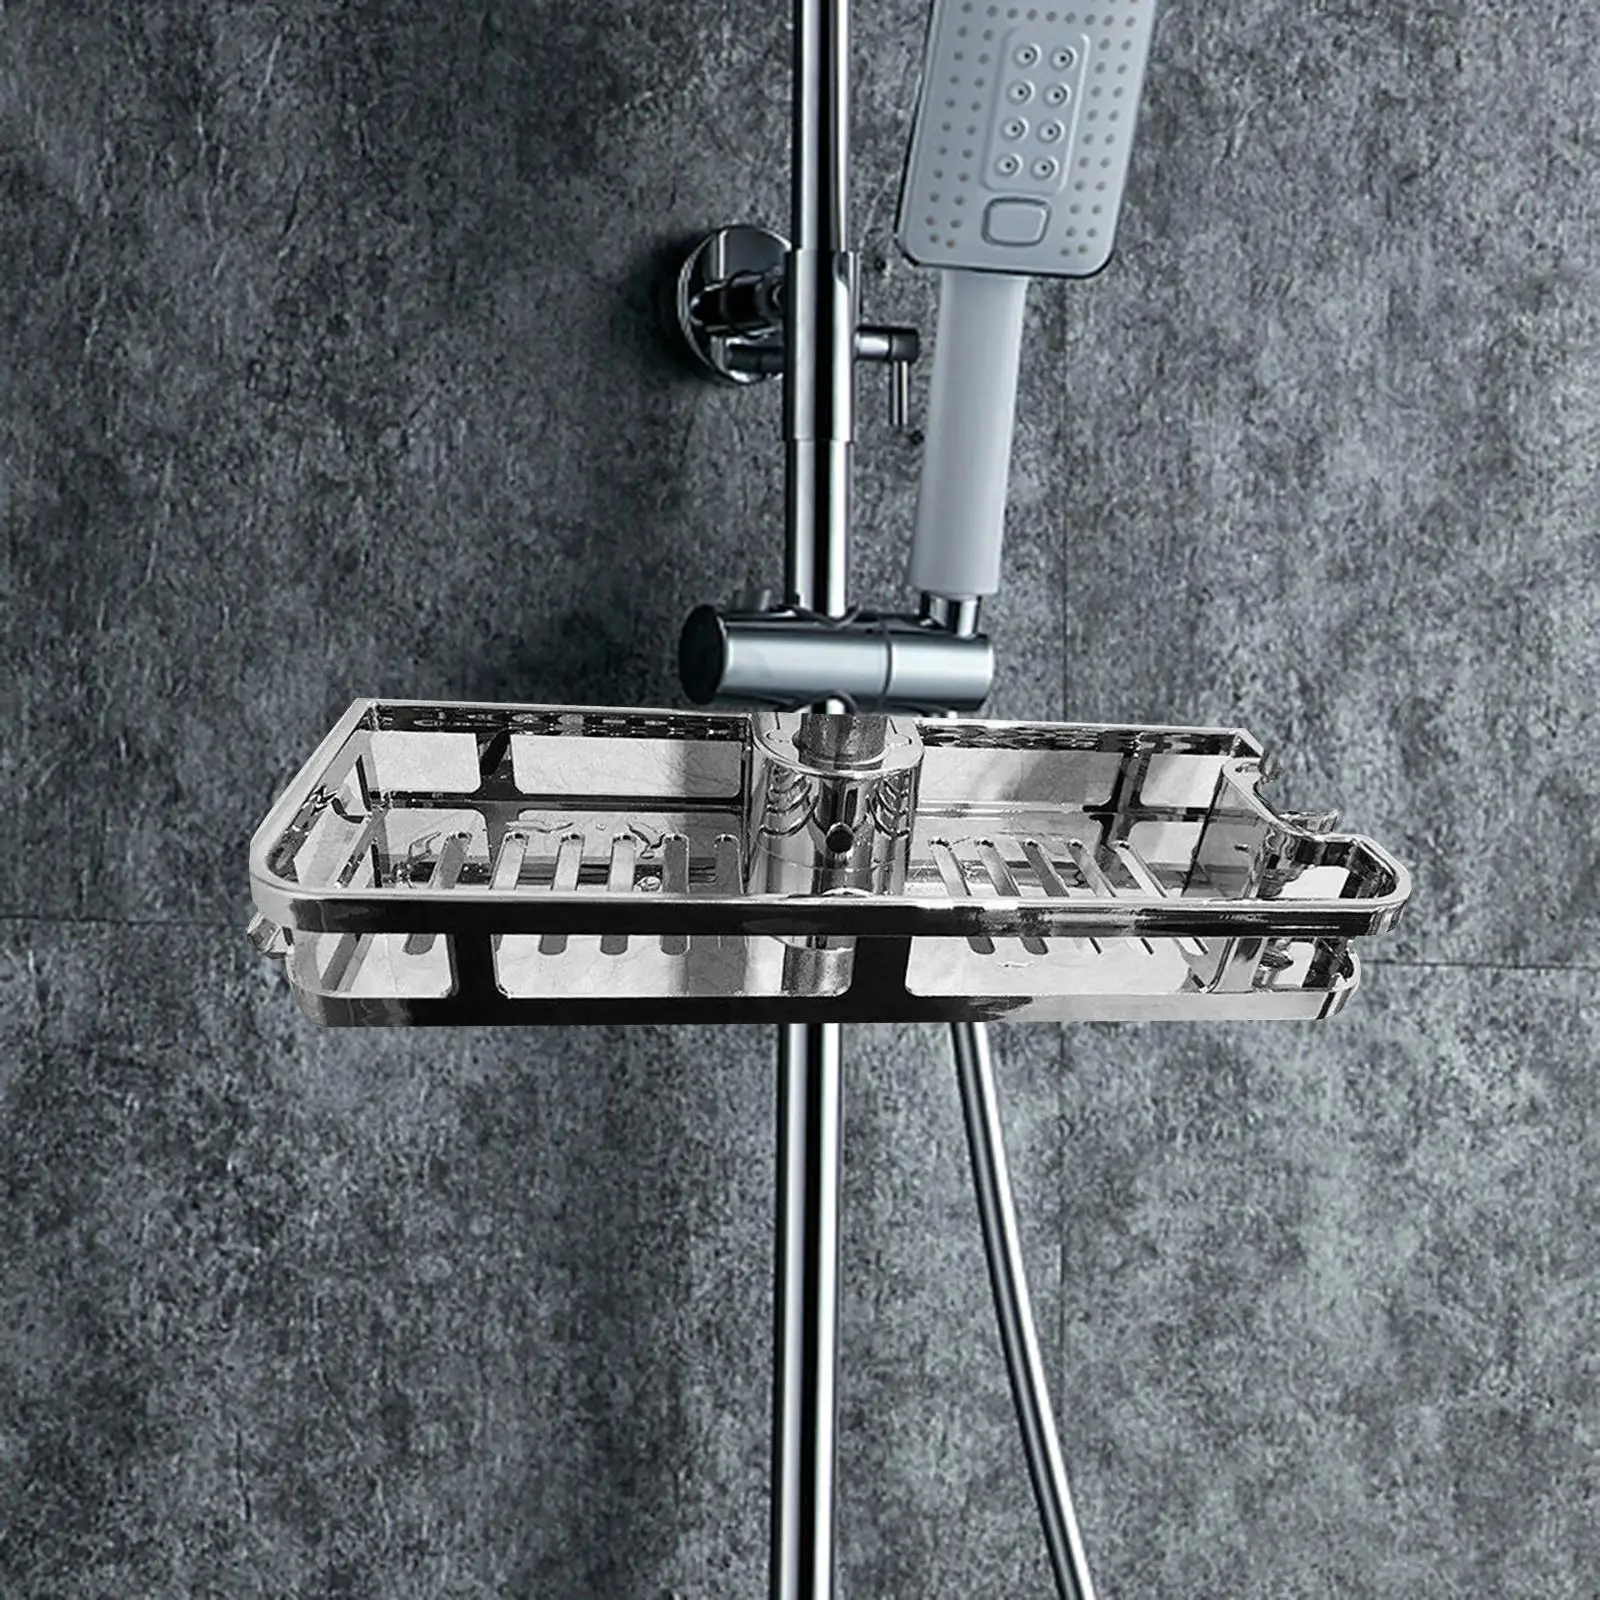 Shower Caddy Shelf Fit 25mm Shower Rail Drainage Shelf Holds Body Wash, Shampoo,